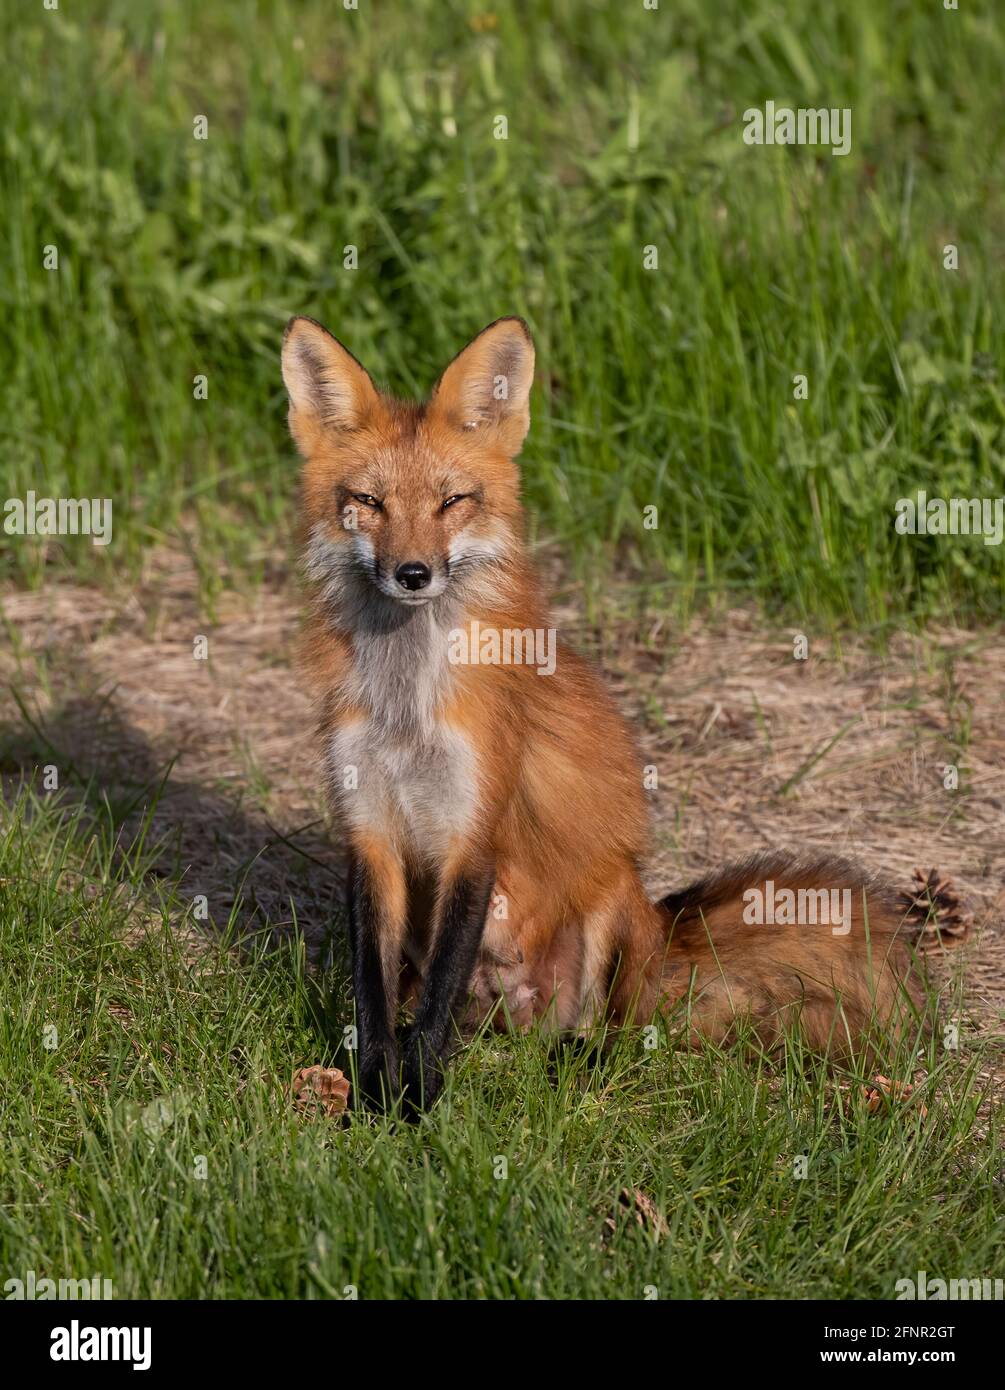 Red fox (Vulpes vulpes) vixen walking through the grass near Ottawa, Canada Stock Photo